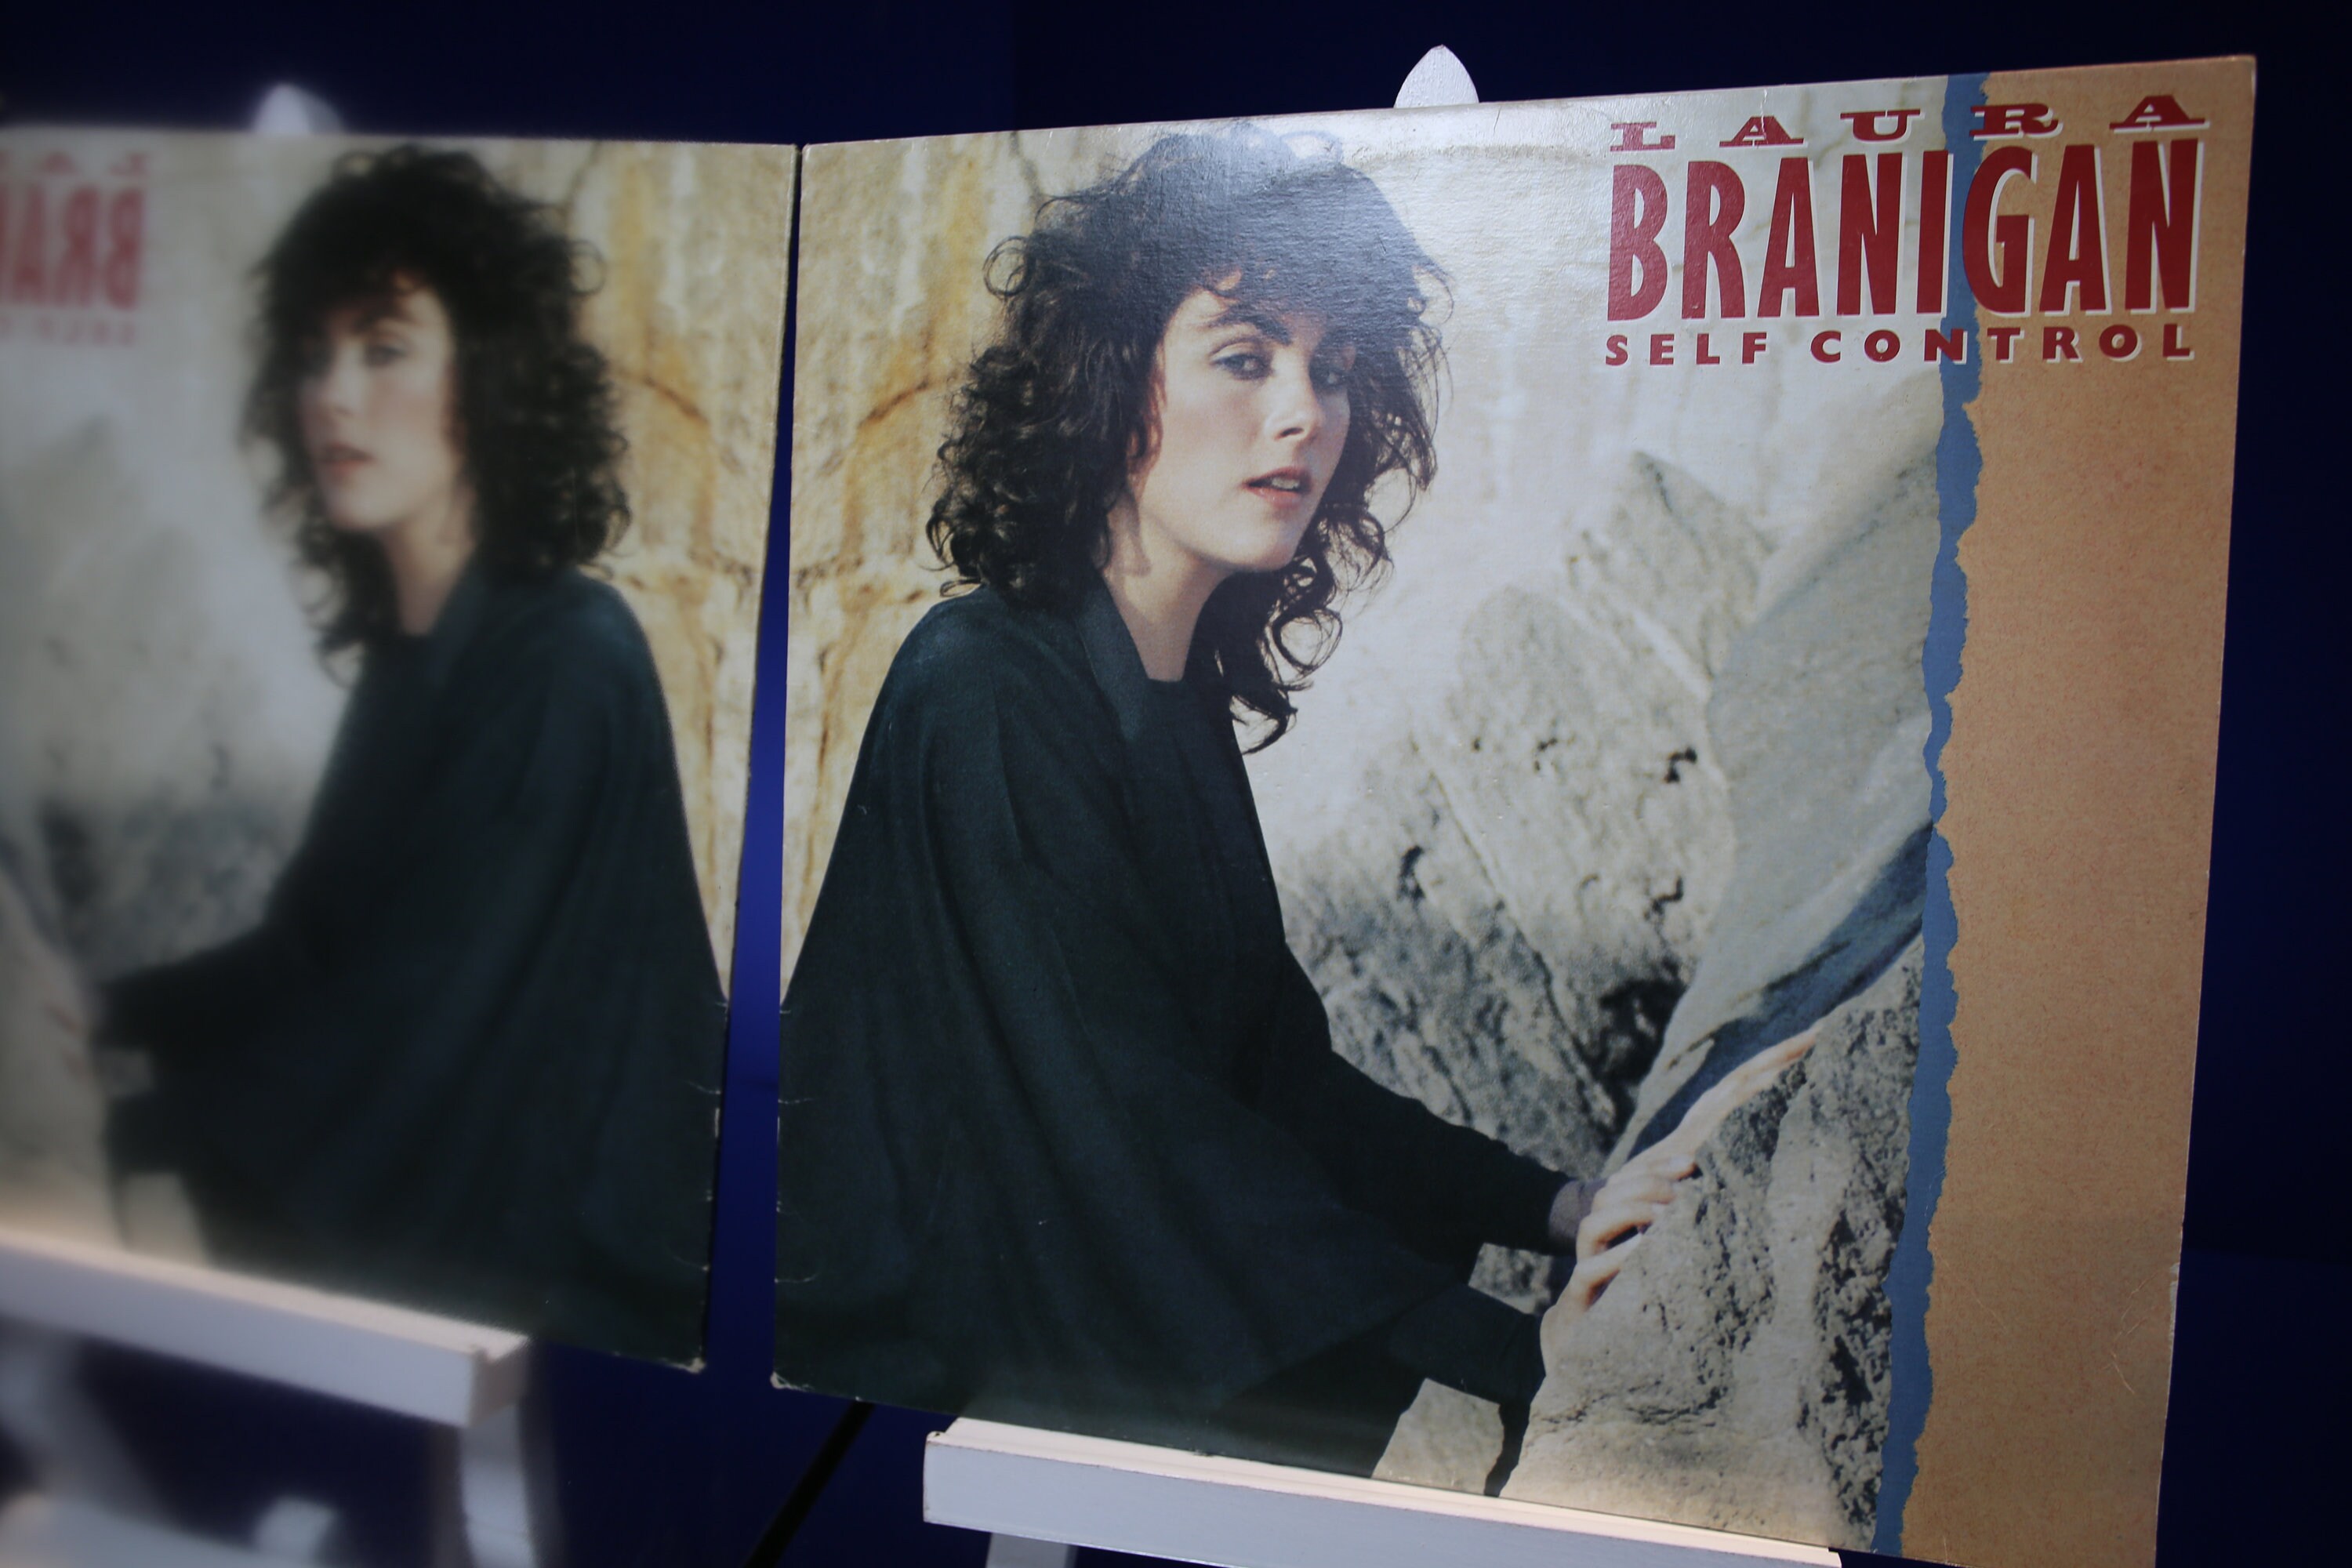 April 1984: Laura Branigan Releases Self Control